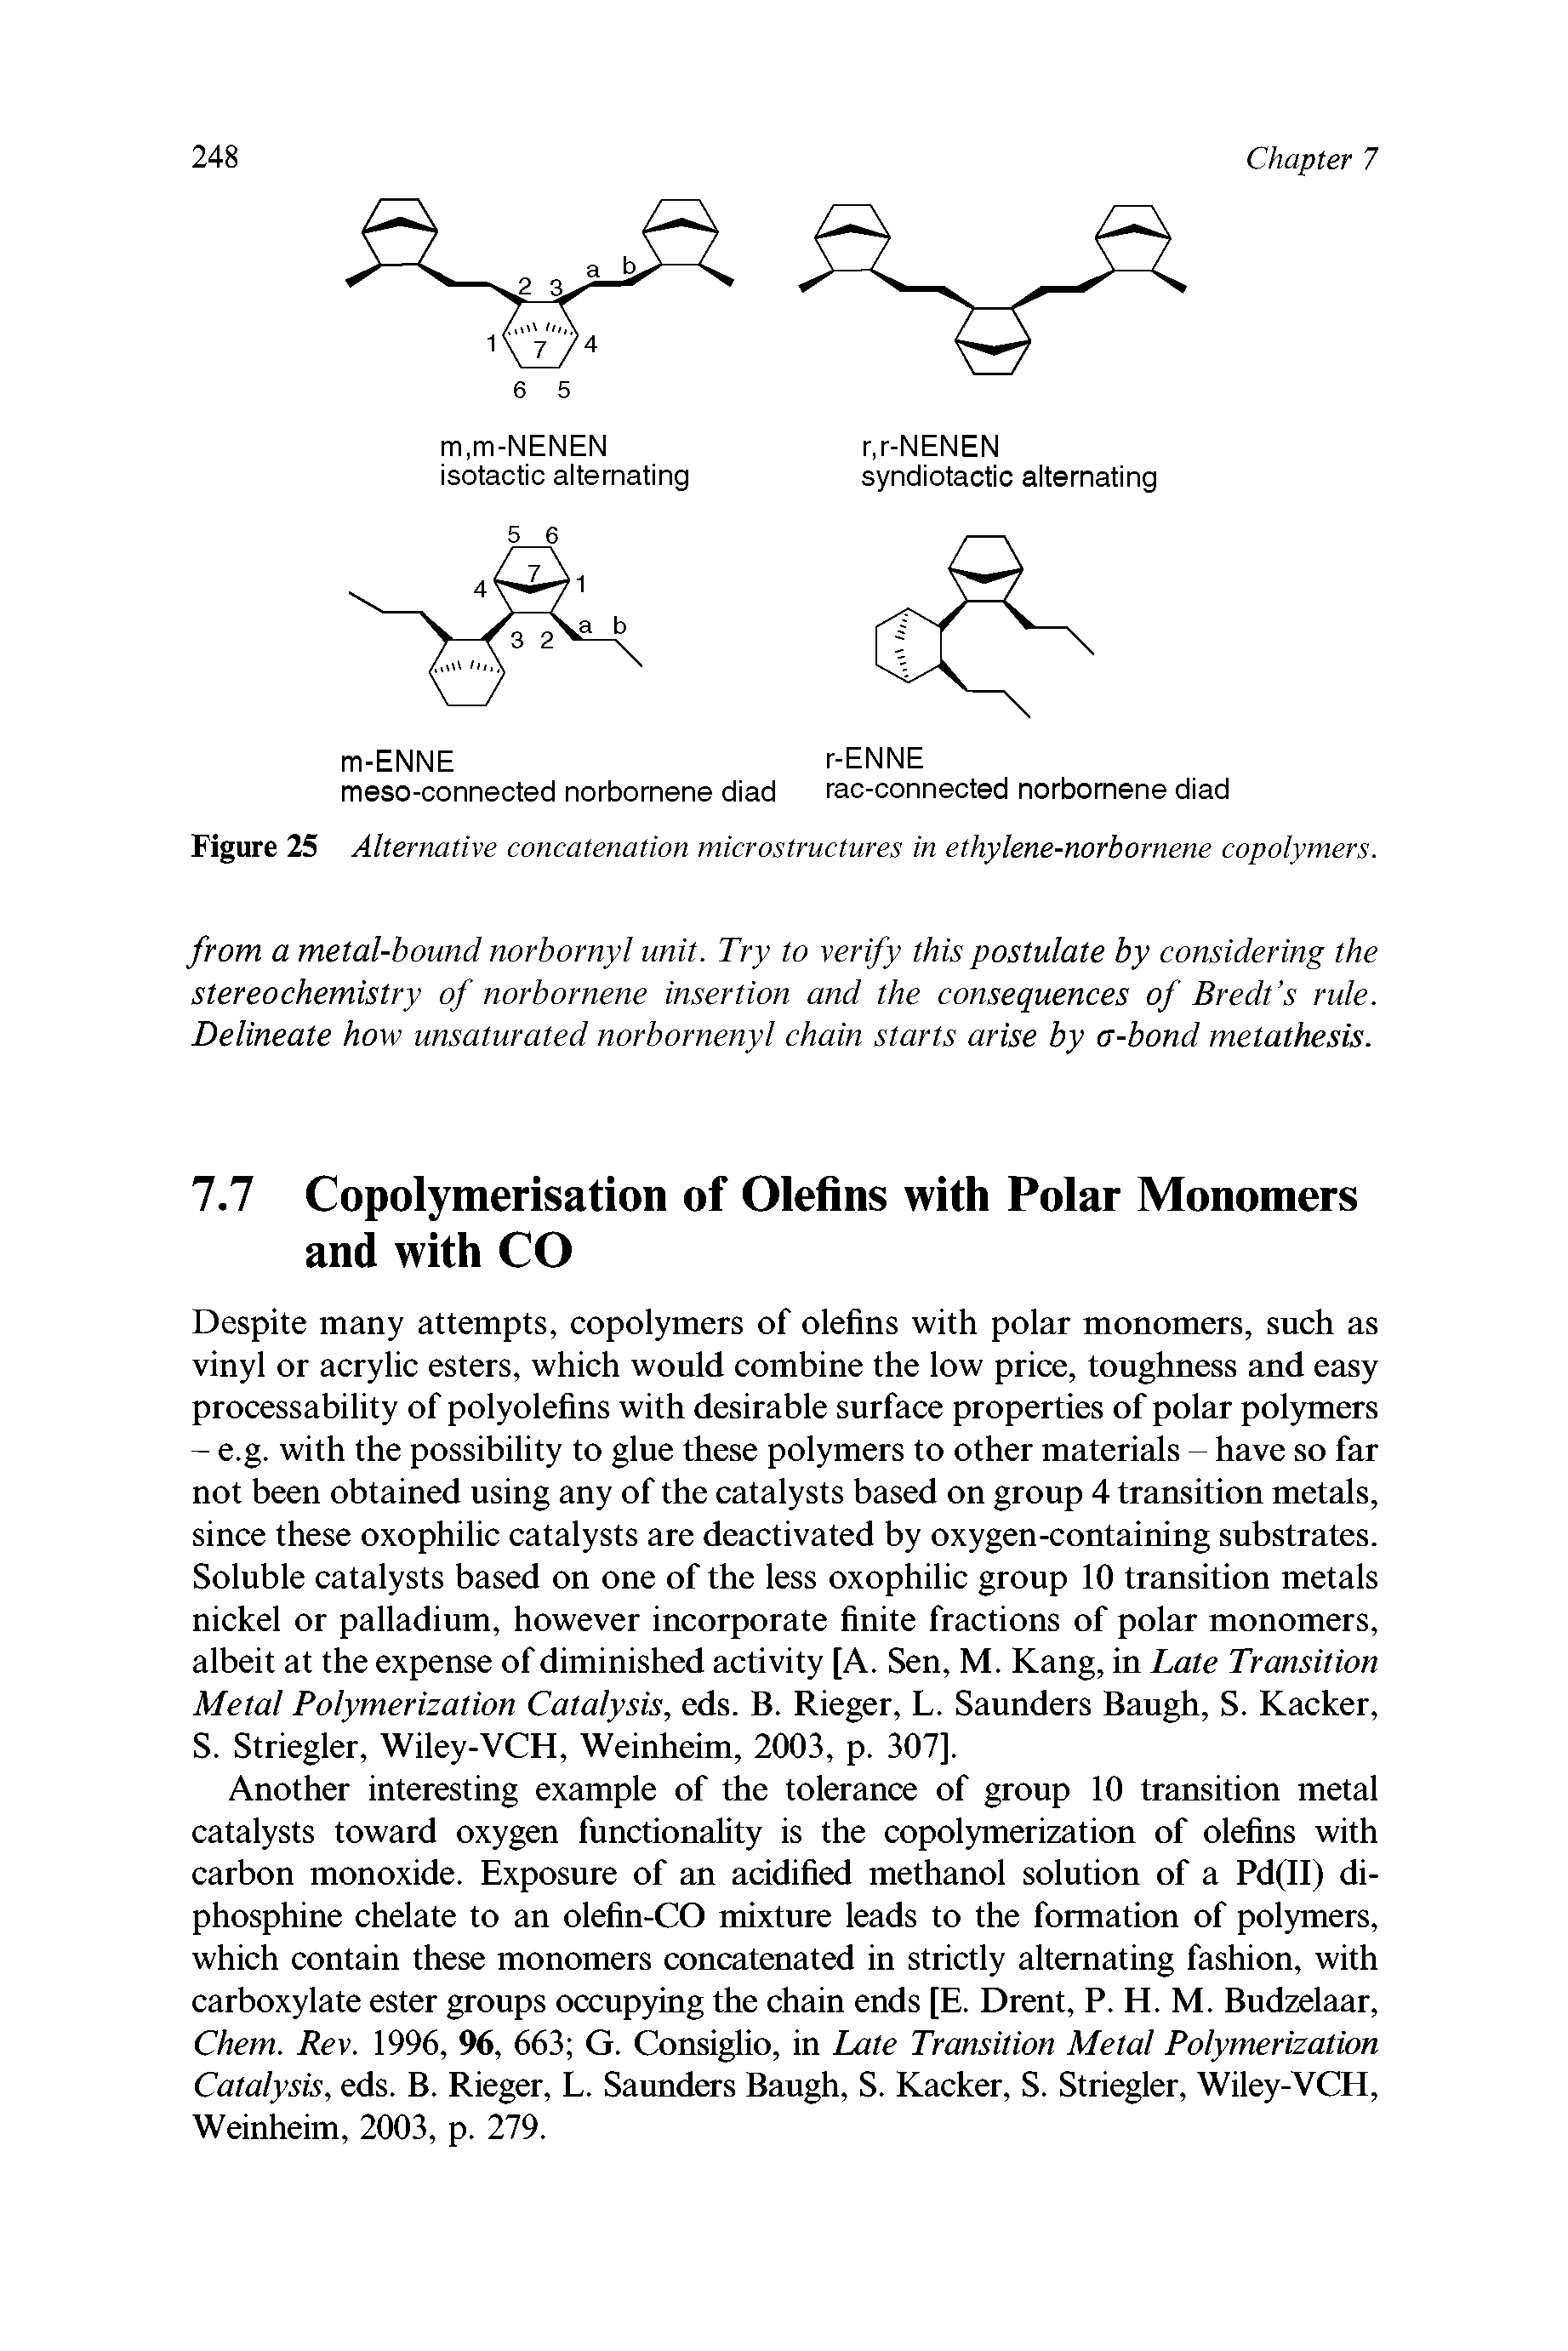 Figure 25 Alternative concatenation microstructures in ethylene-norbornene copolymers.